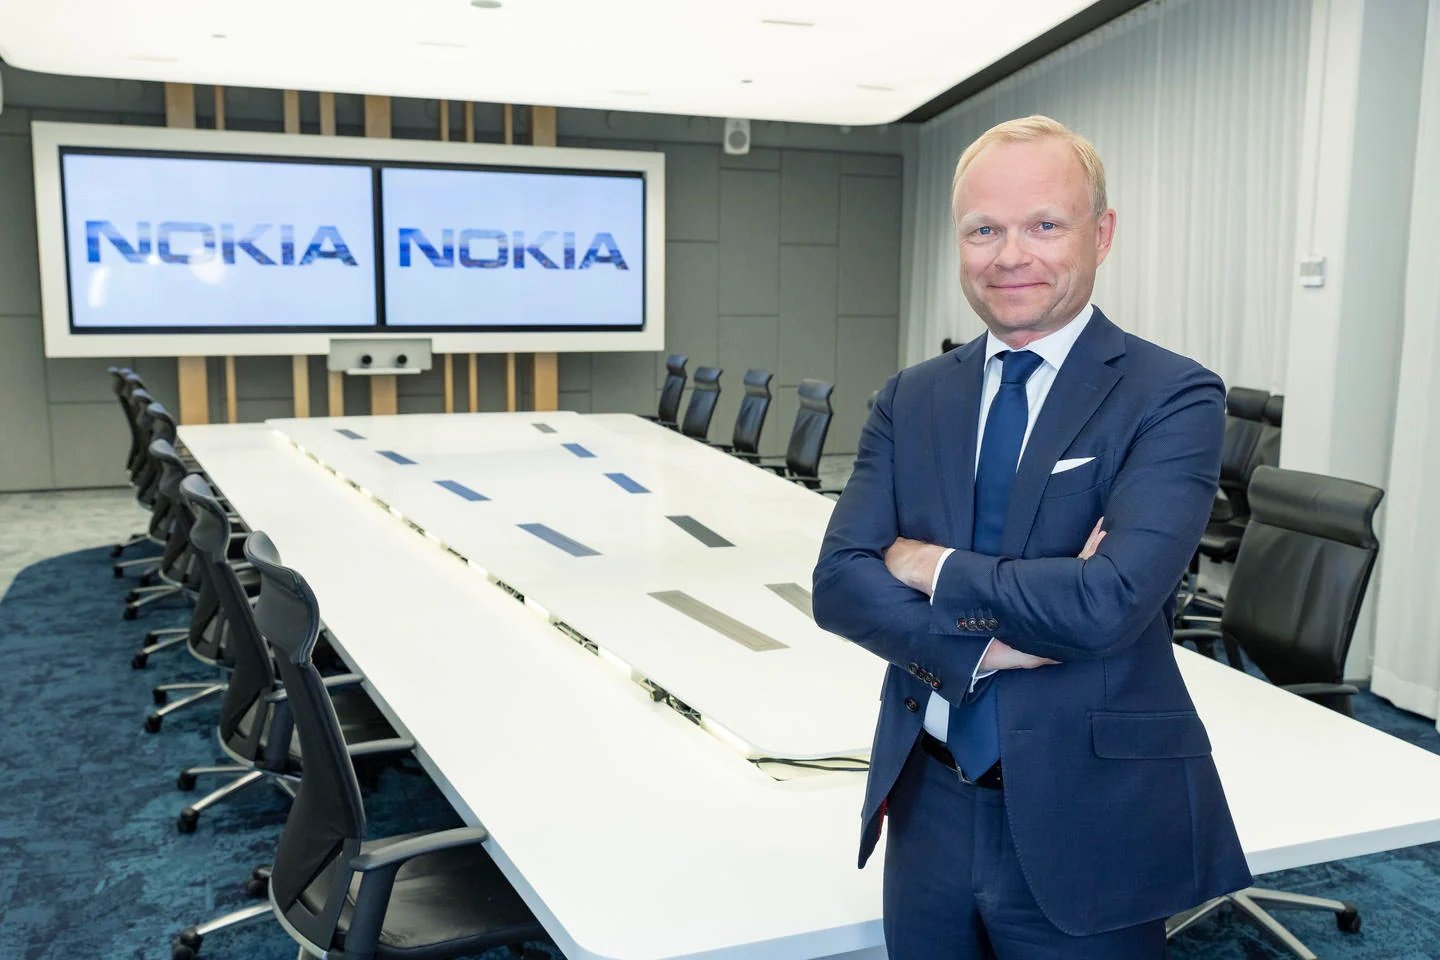 Nokia CEO Pekka Lundmark in conference room